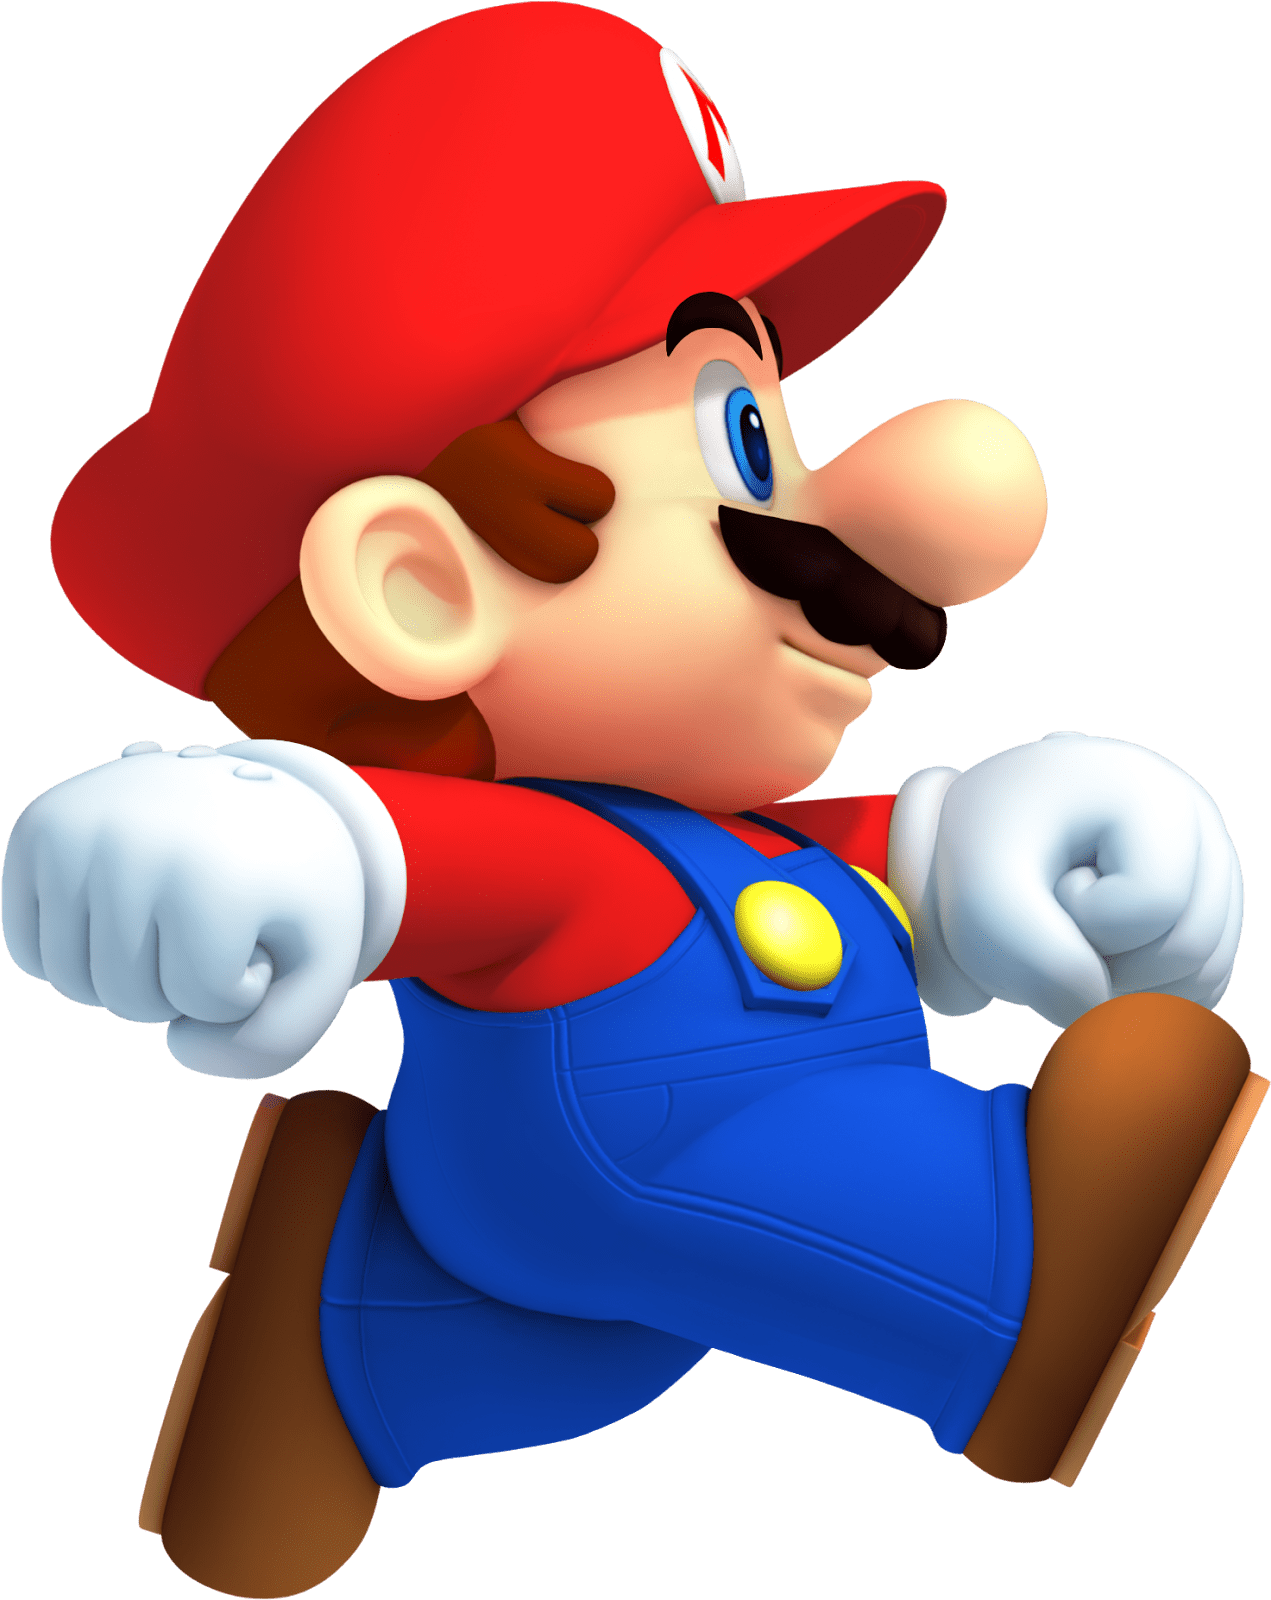 Mario bros clipart vector